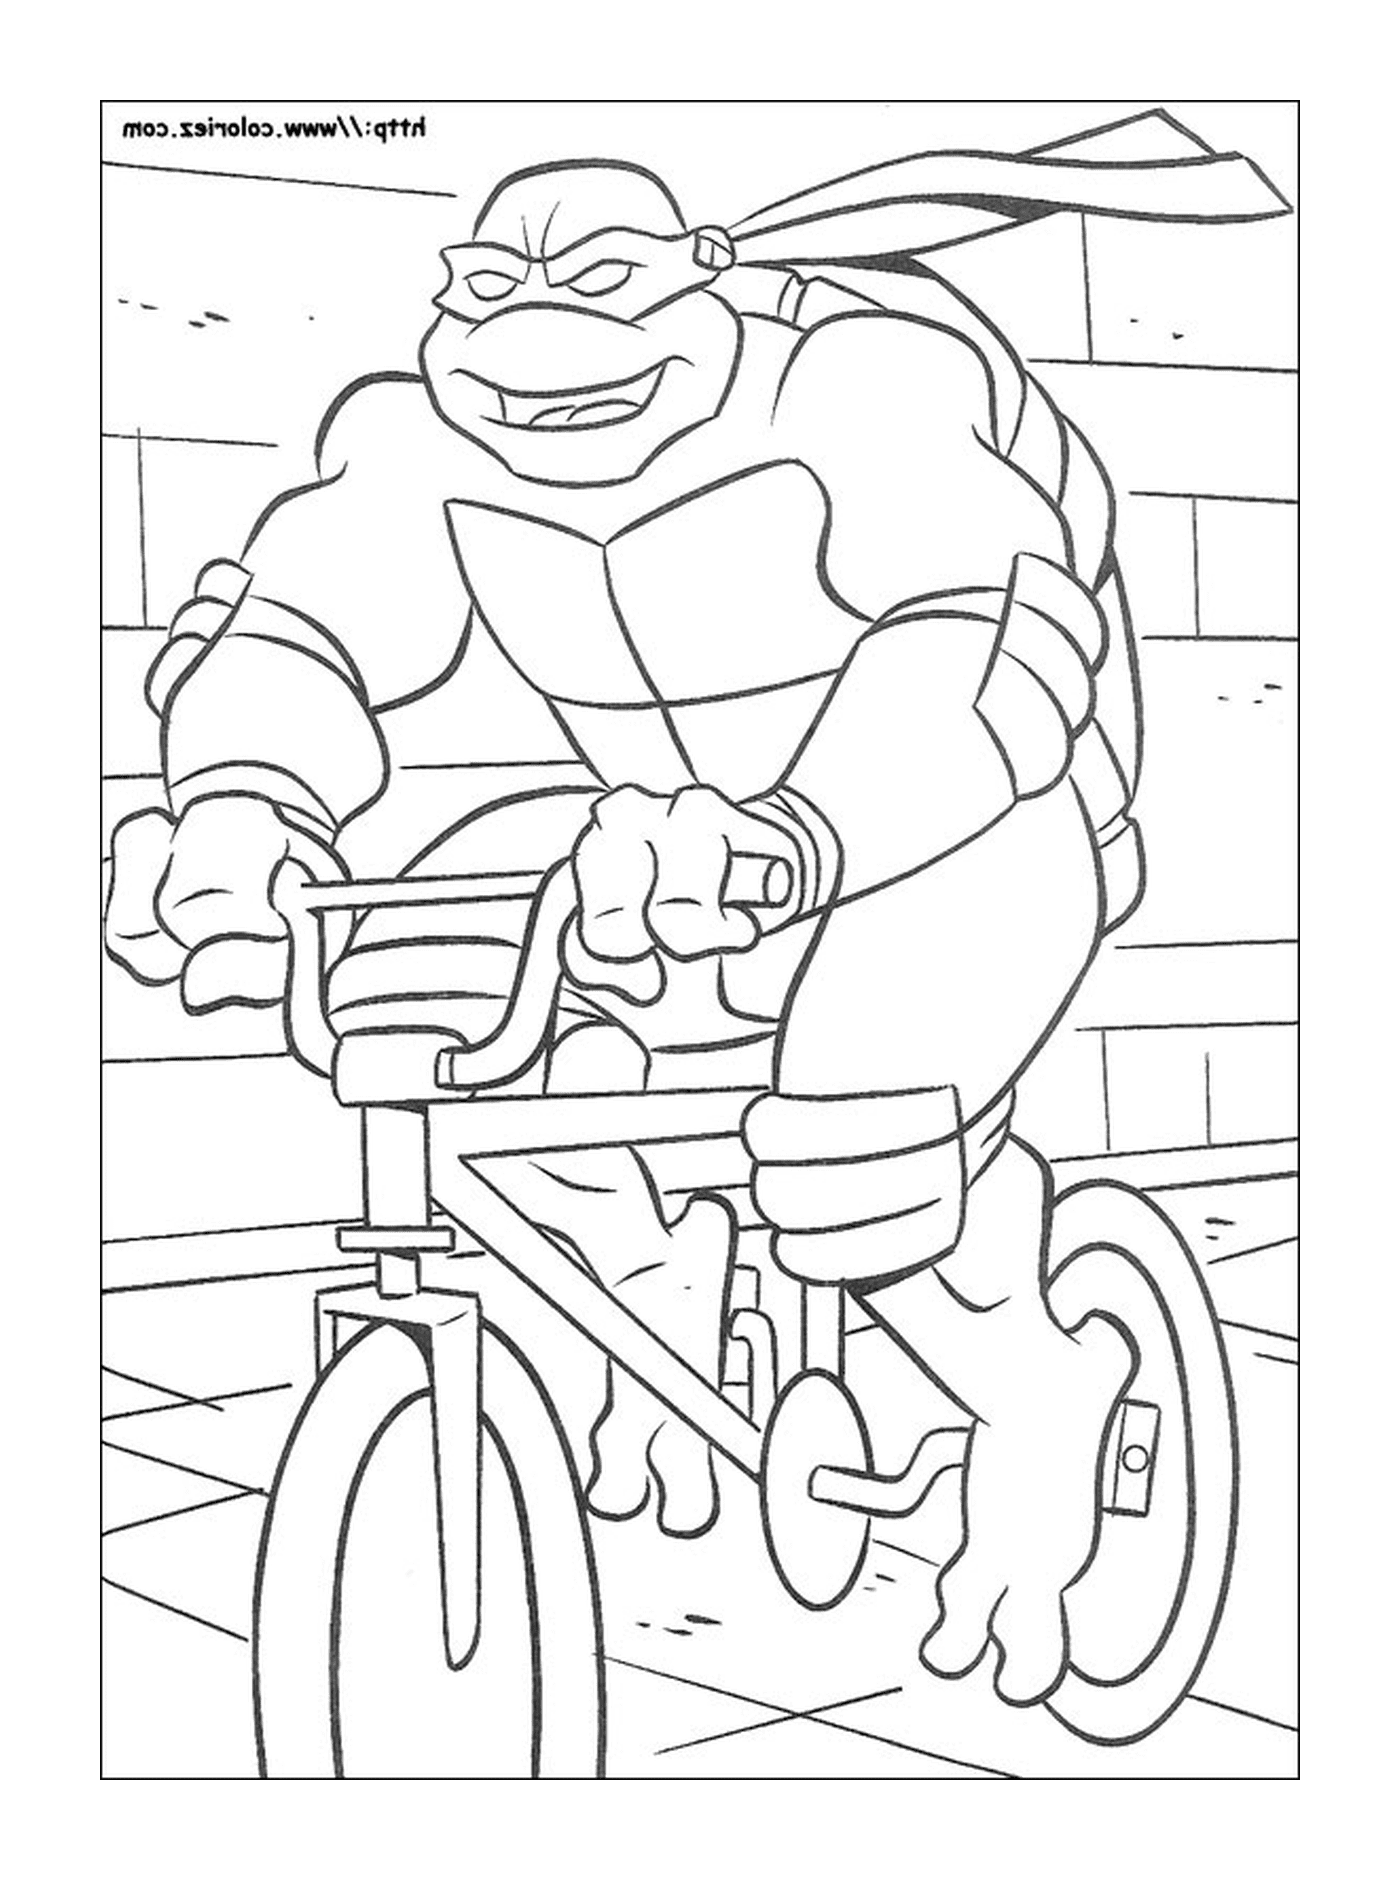  Hombre en bicicleta 